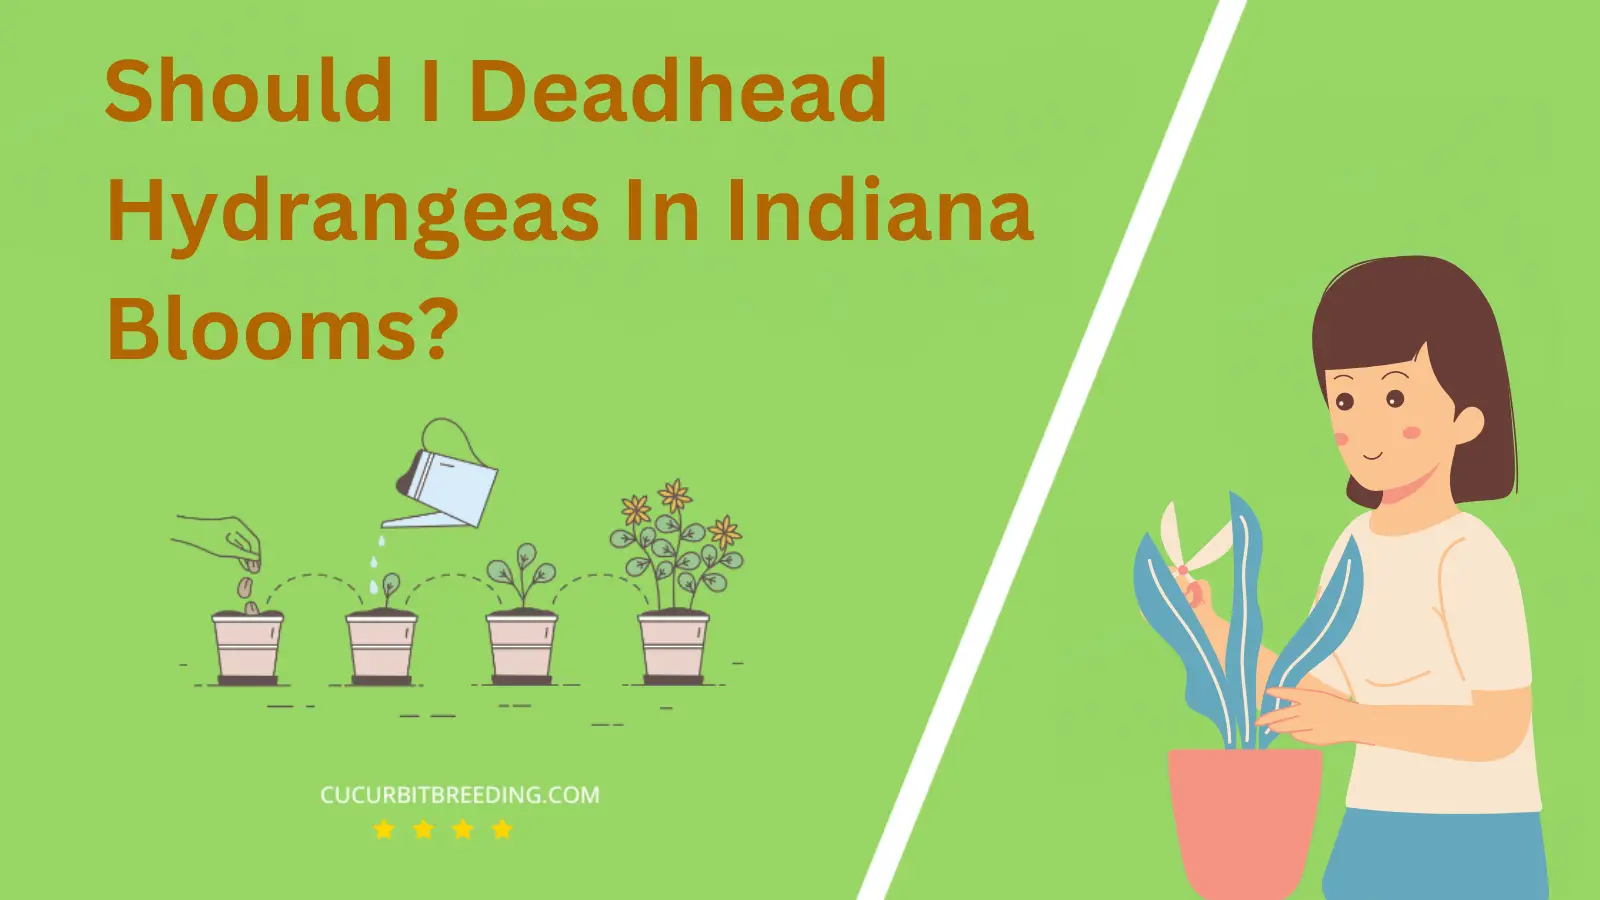 Should I Deadhead Hydrangeas In Indiana Blooms?